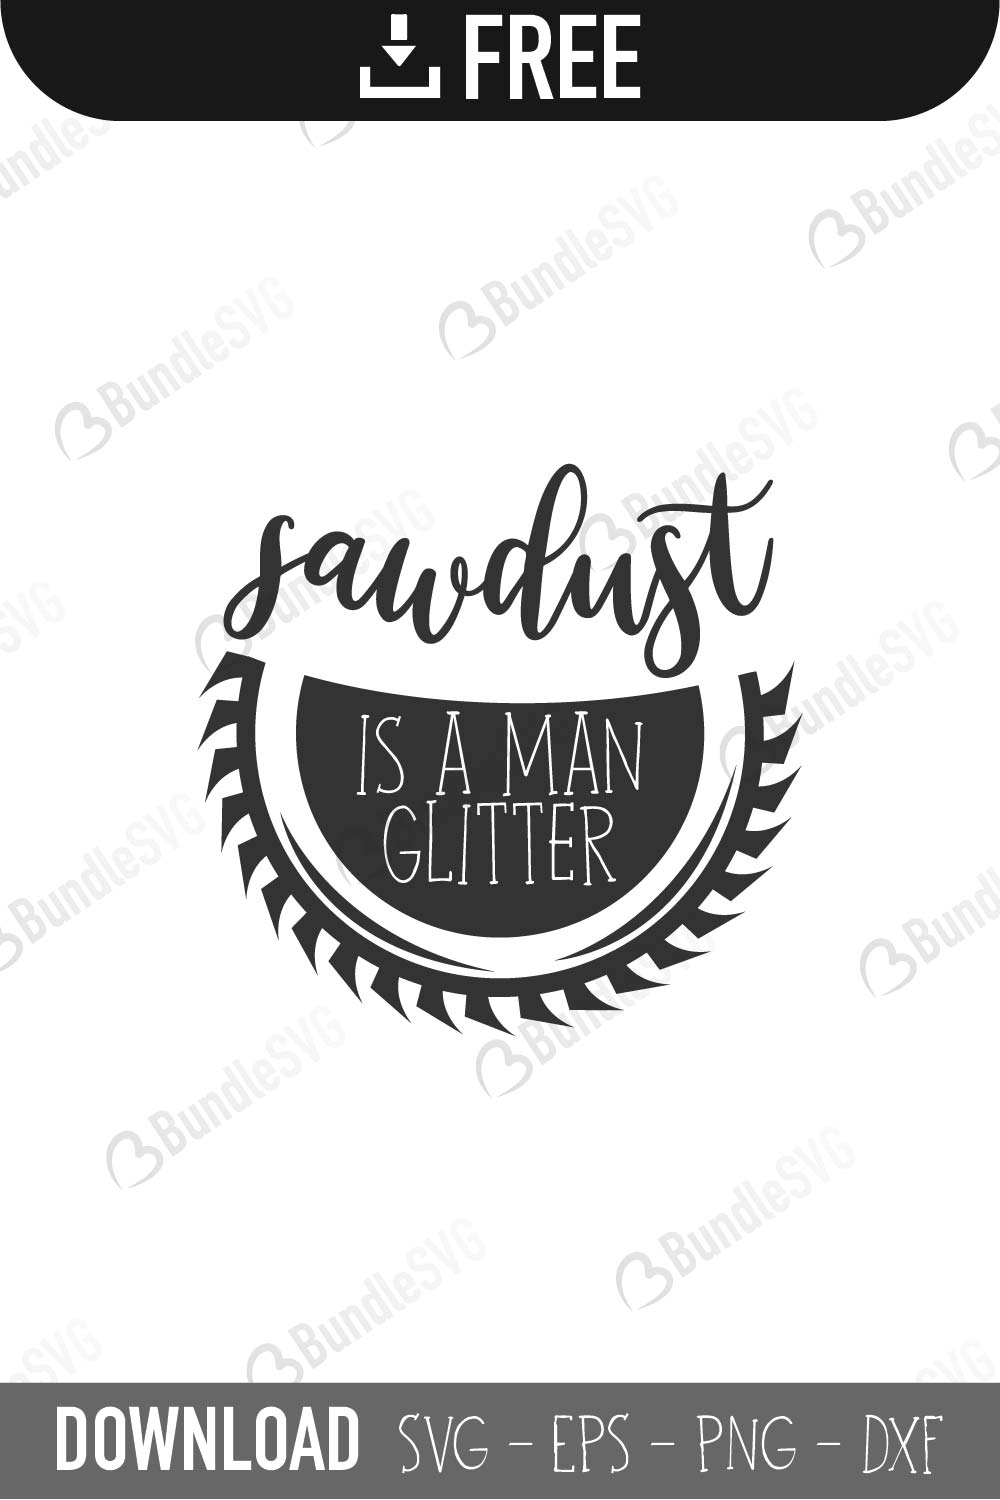 Sawdust Is Man Glitter Svg Cut Files Free Download Bundlesvg